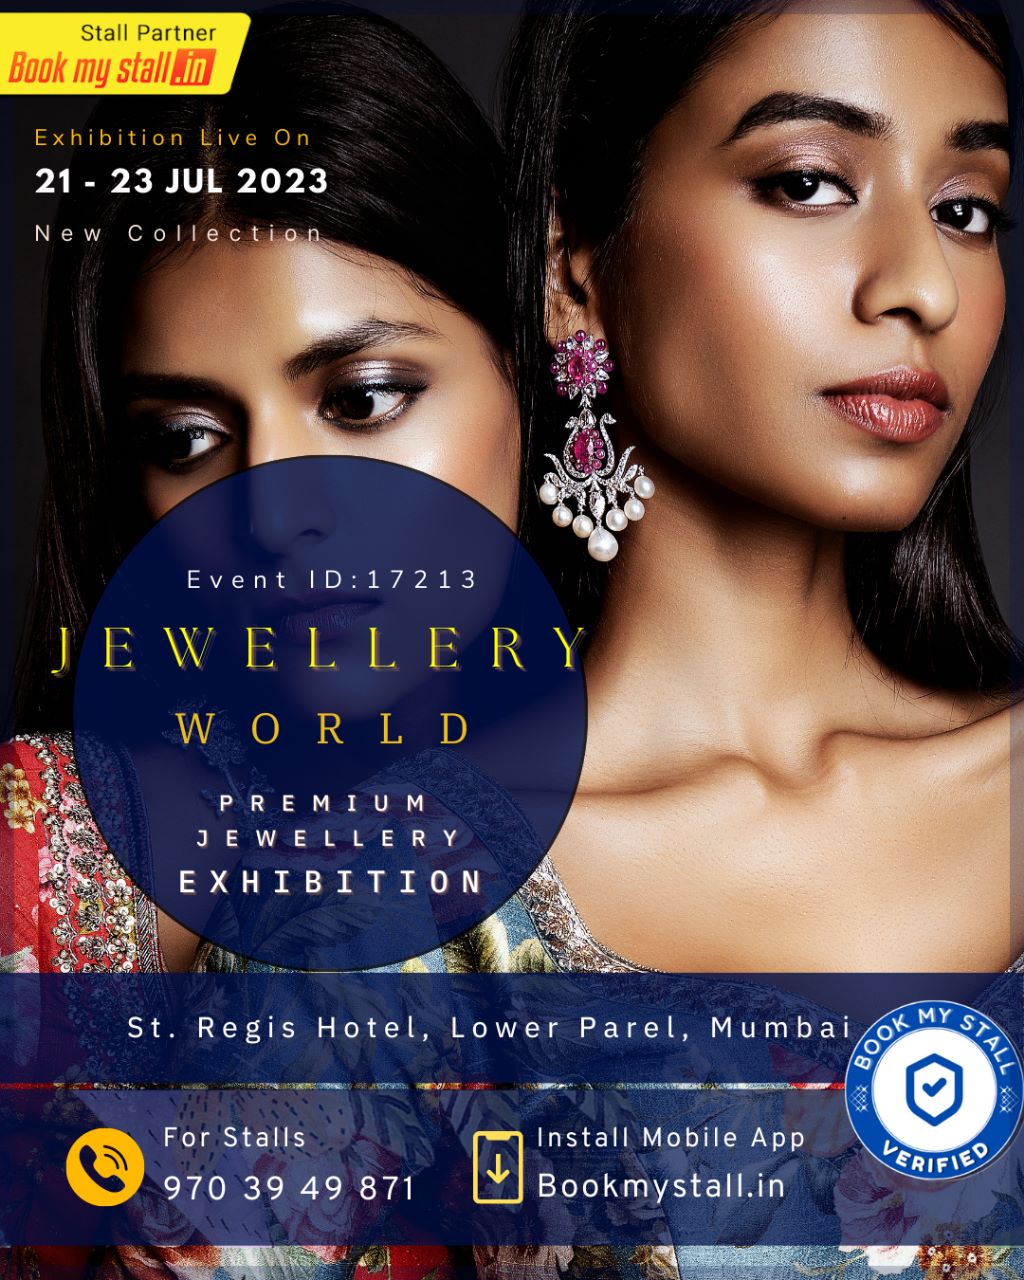 Jewellery World - Premium Jewellery Exhibition, Mumbai, Maharashtra, India